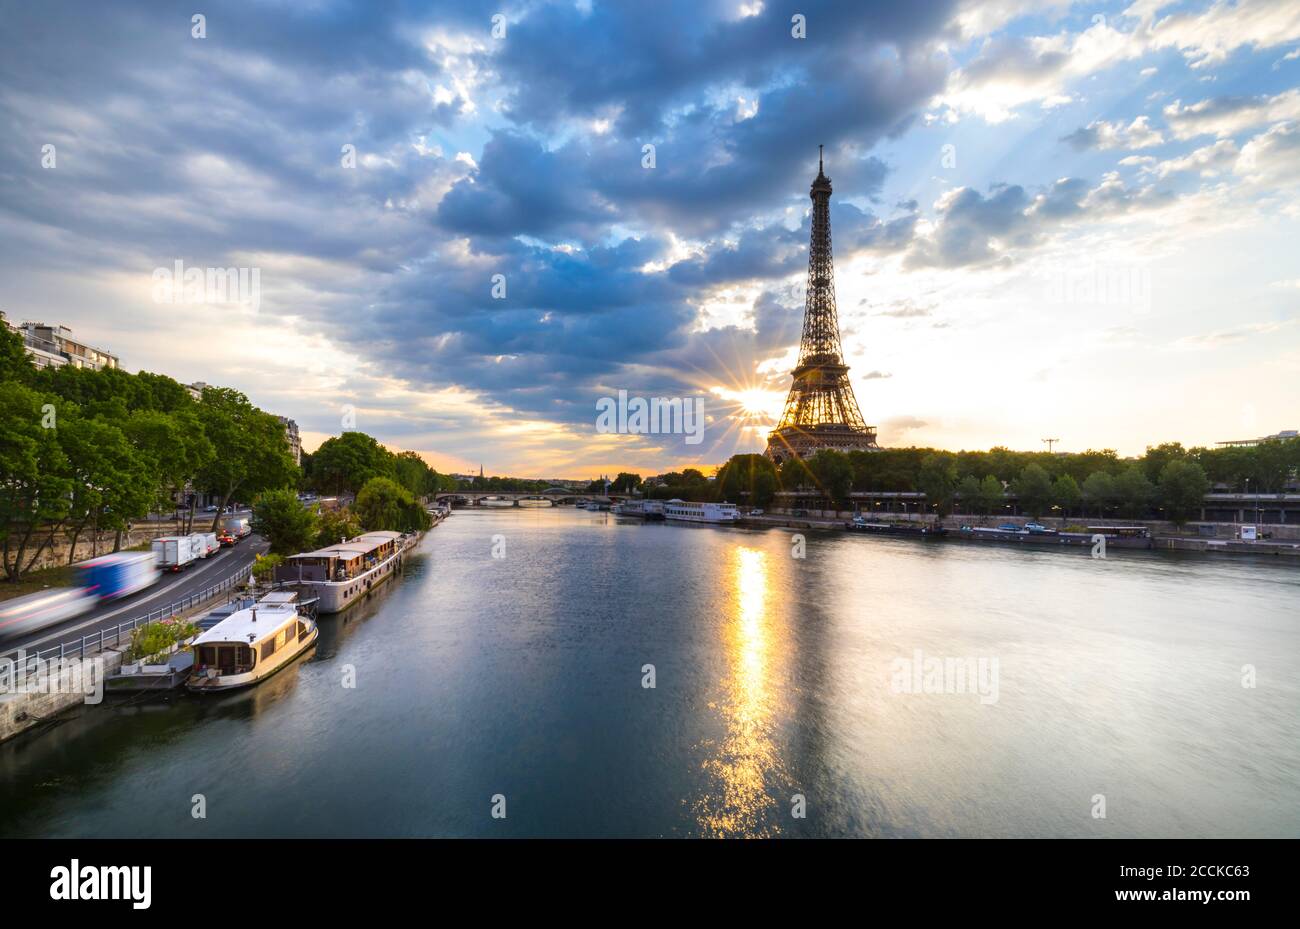 Eiffel Tower by Seine river against blue sky during sunrise, Paris, France Stock Photo